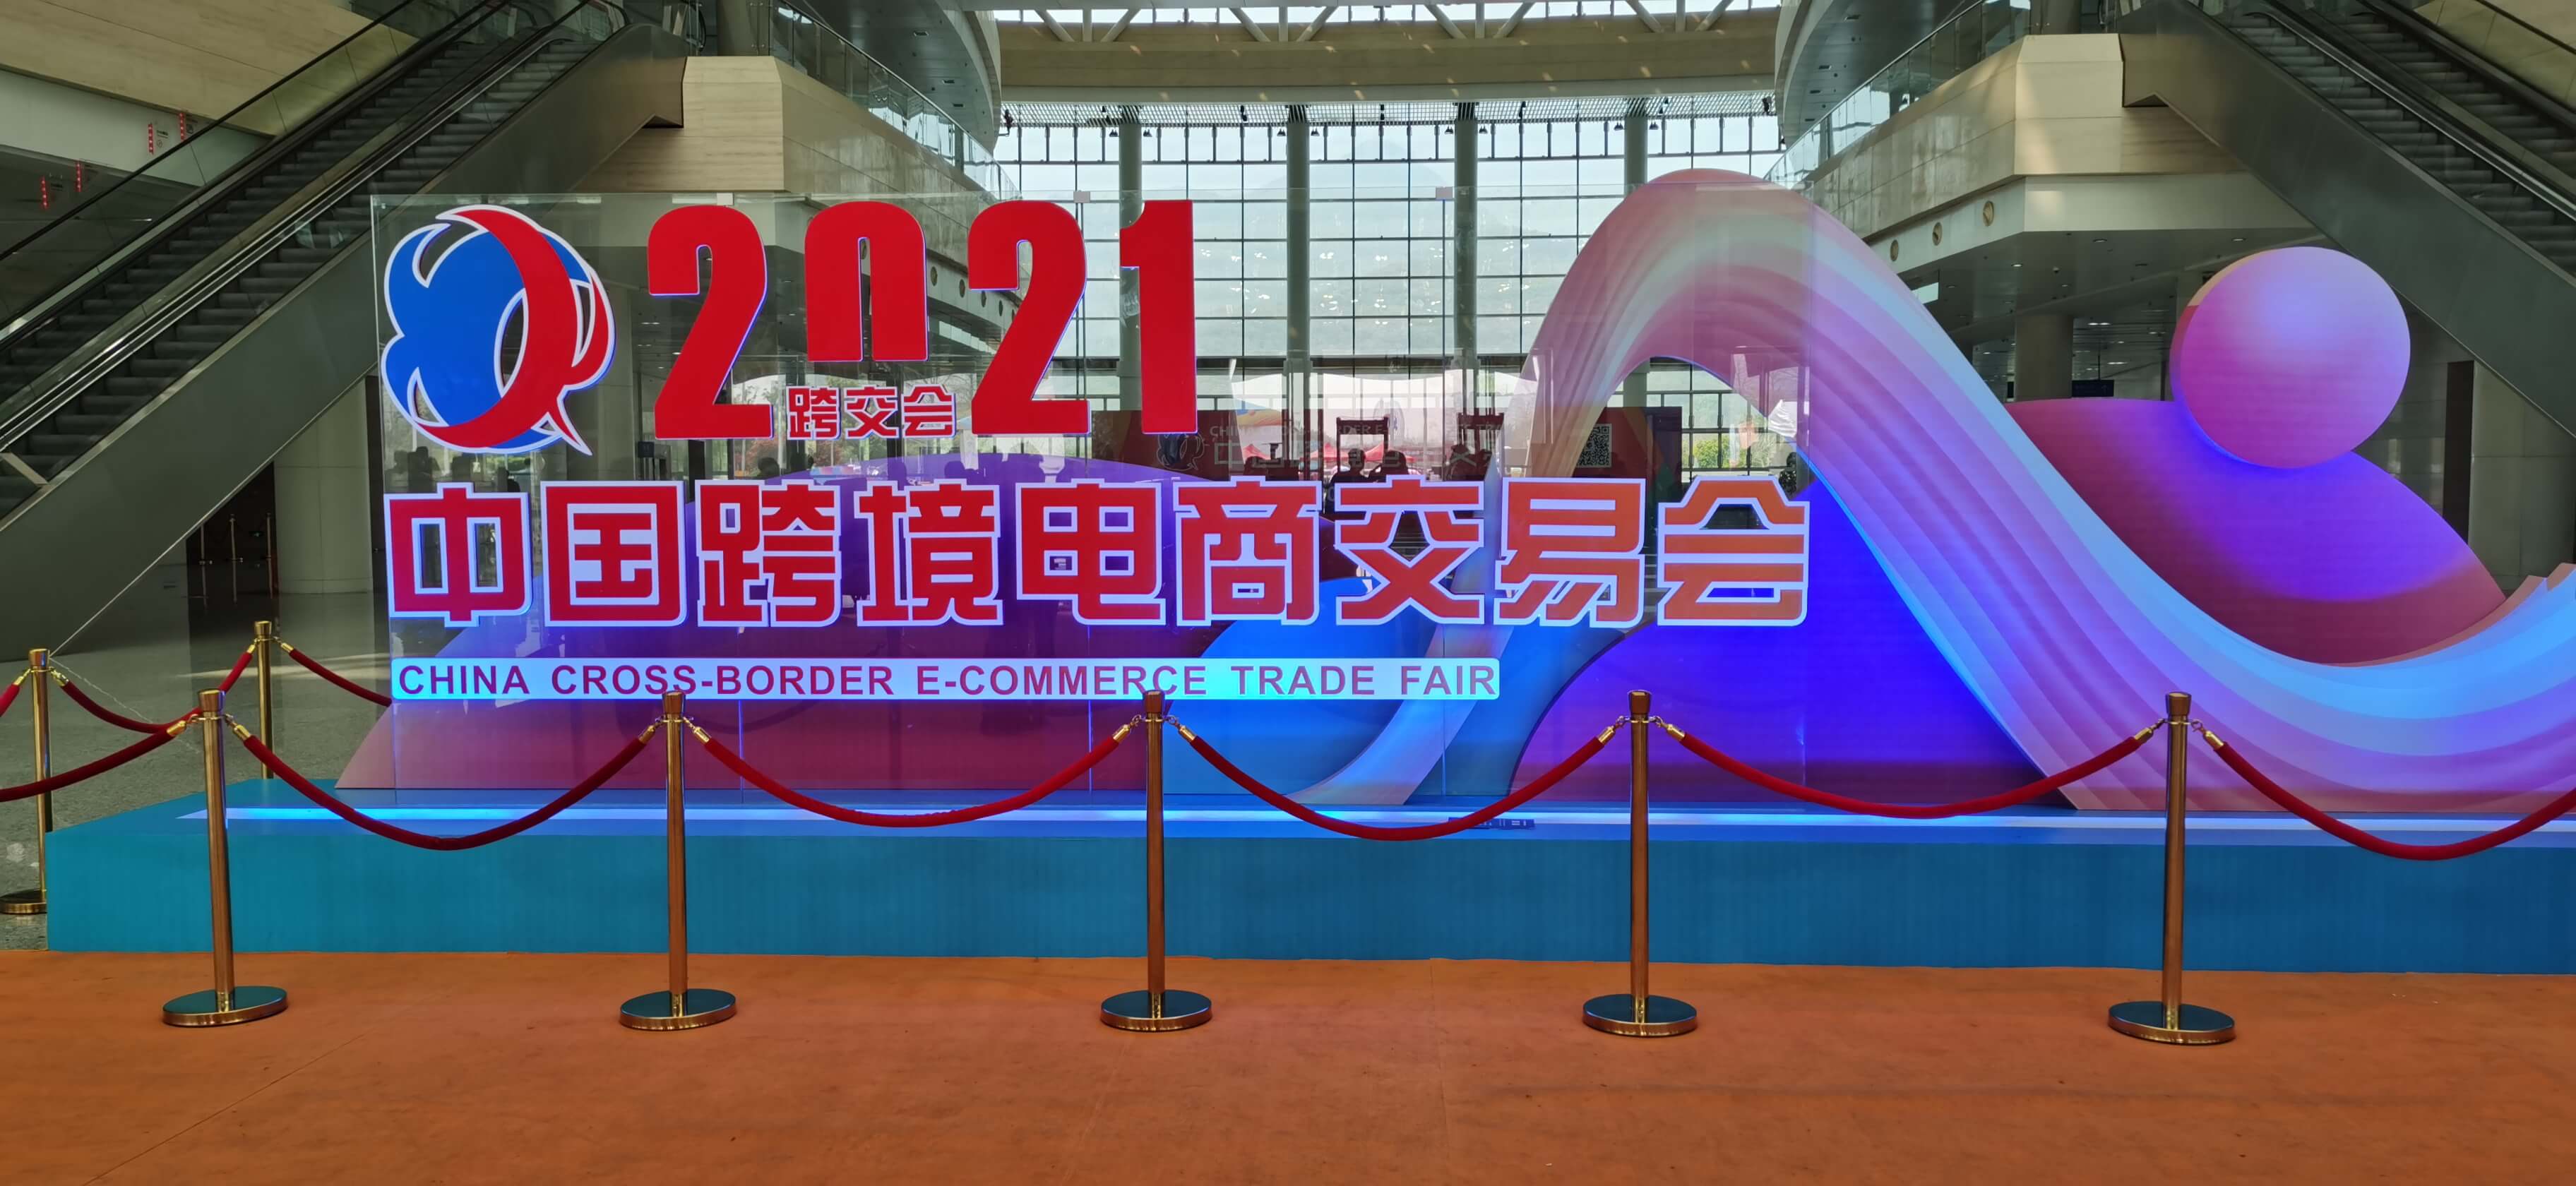 China Cross-border E-commerce Trade Fair